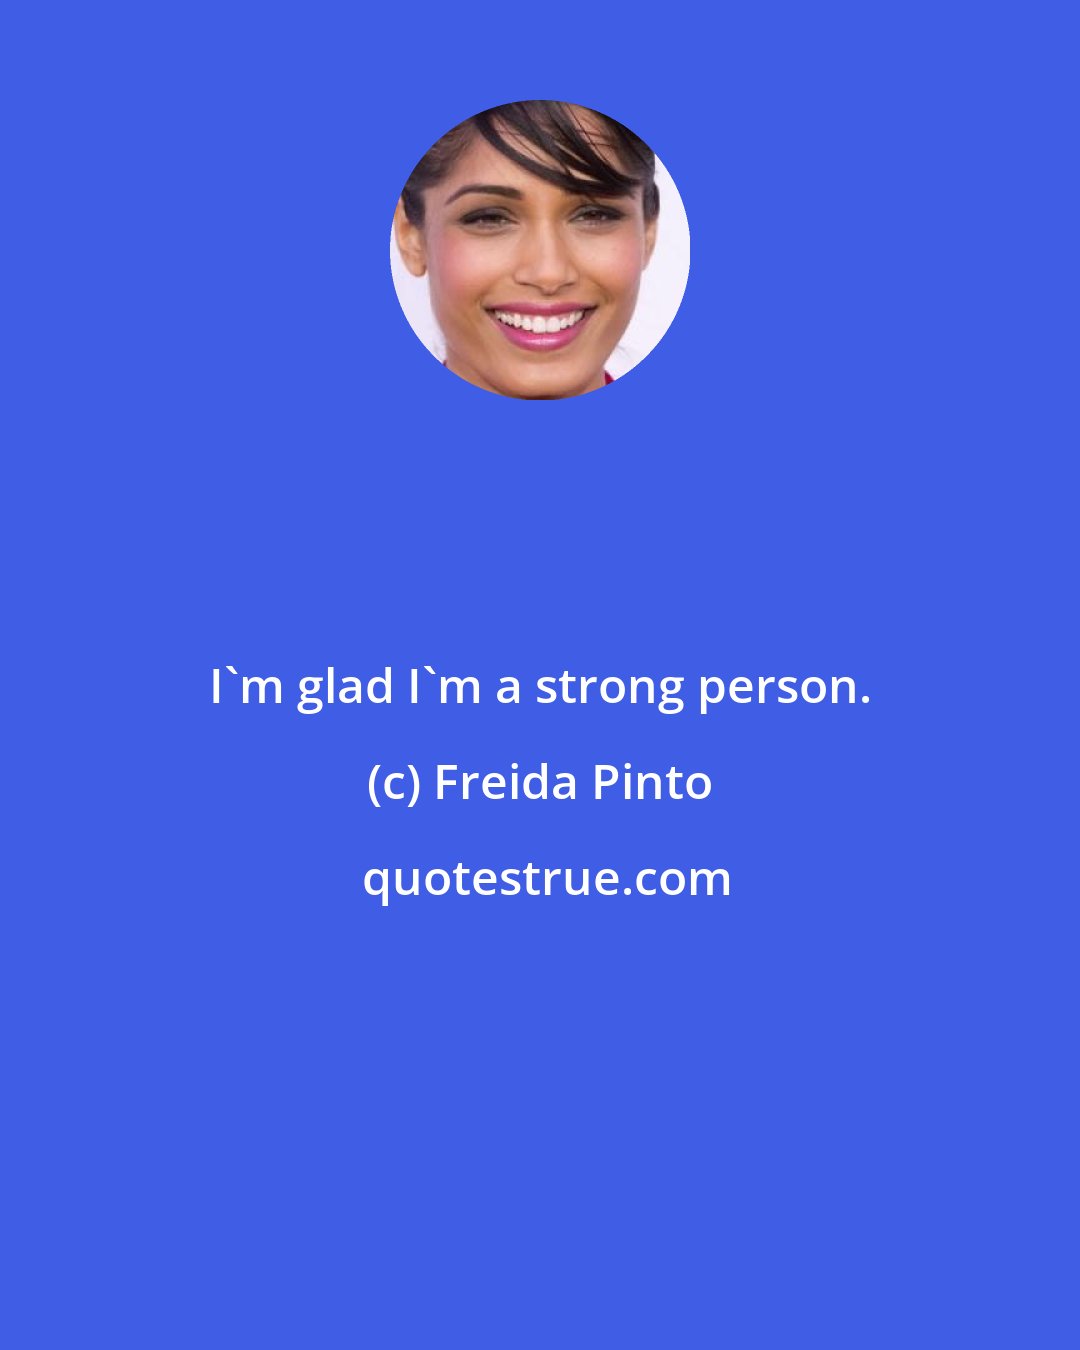 Freida Pinto: I'm glad I'm a strong person.